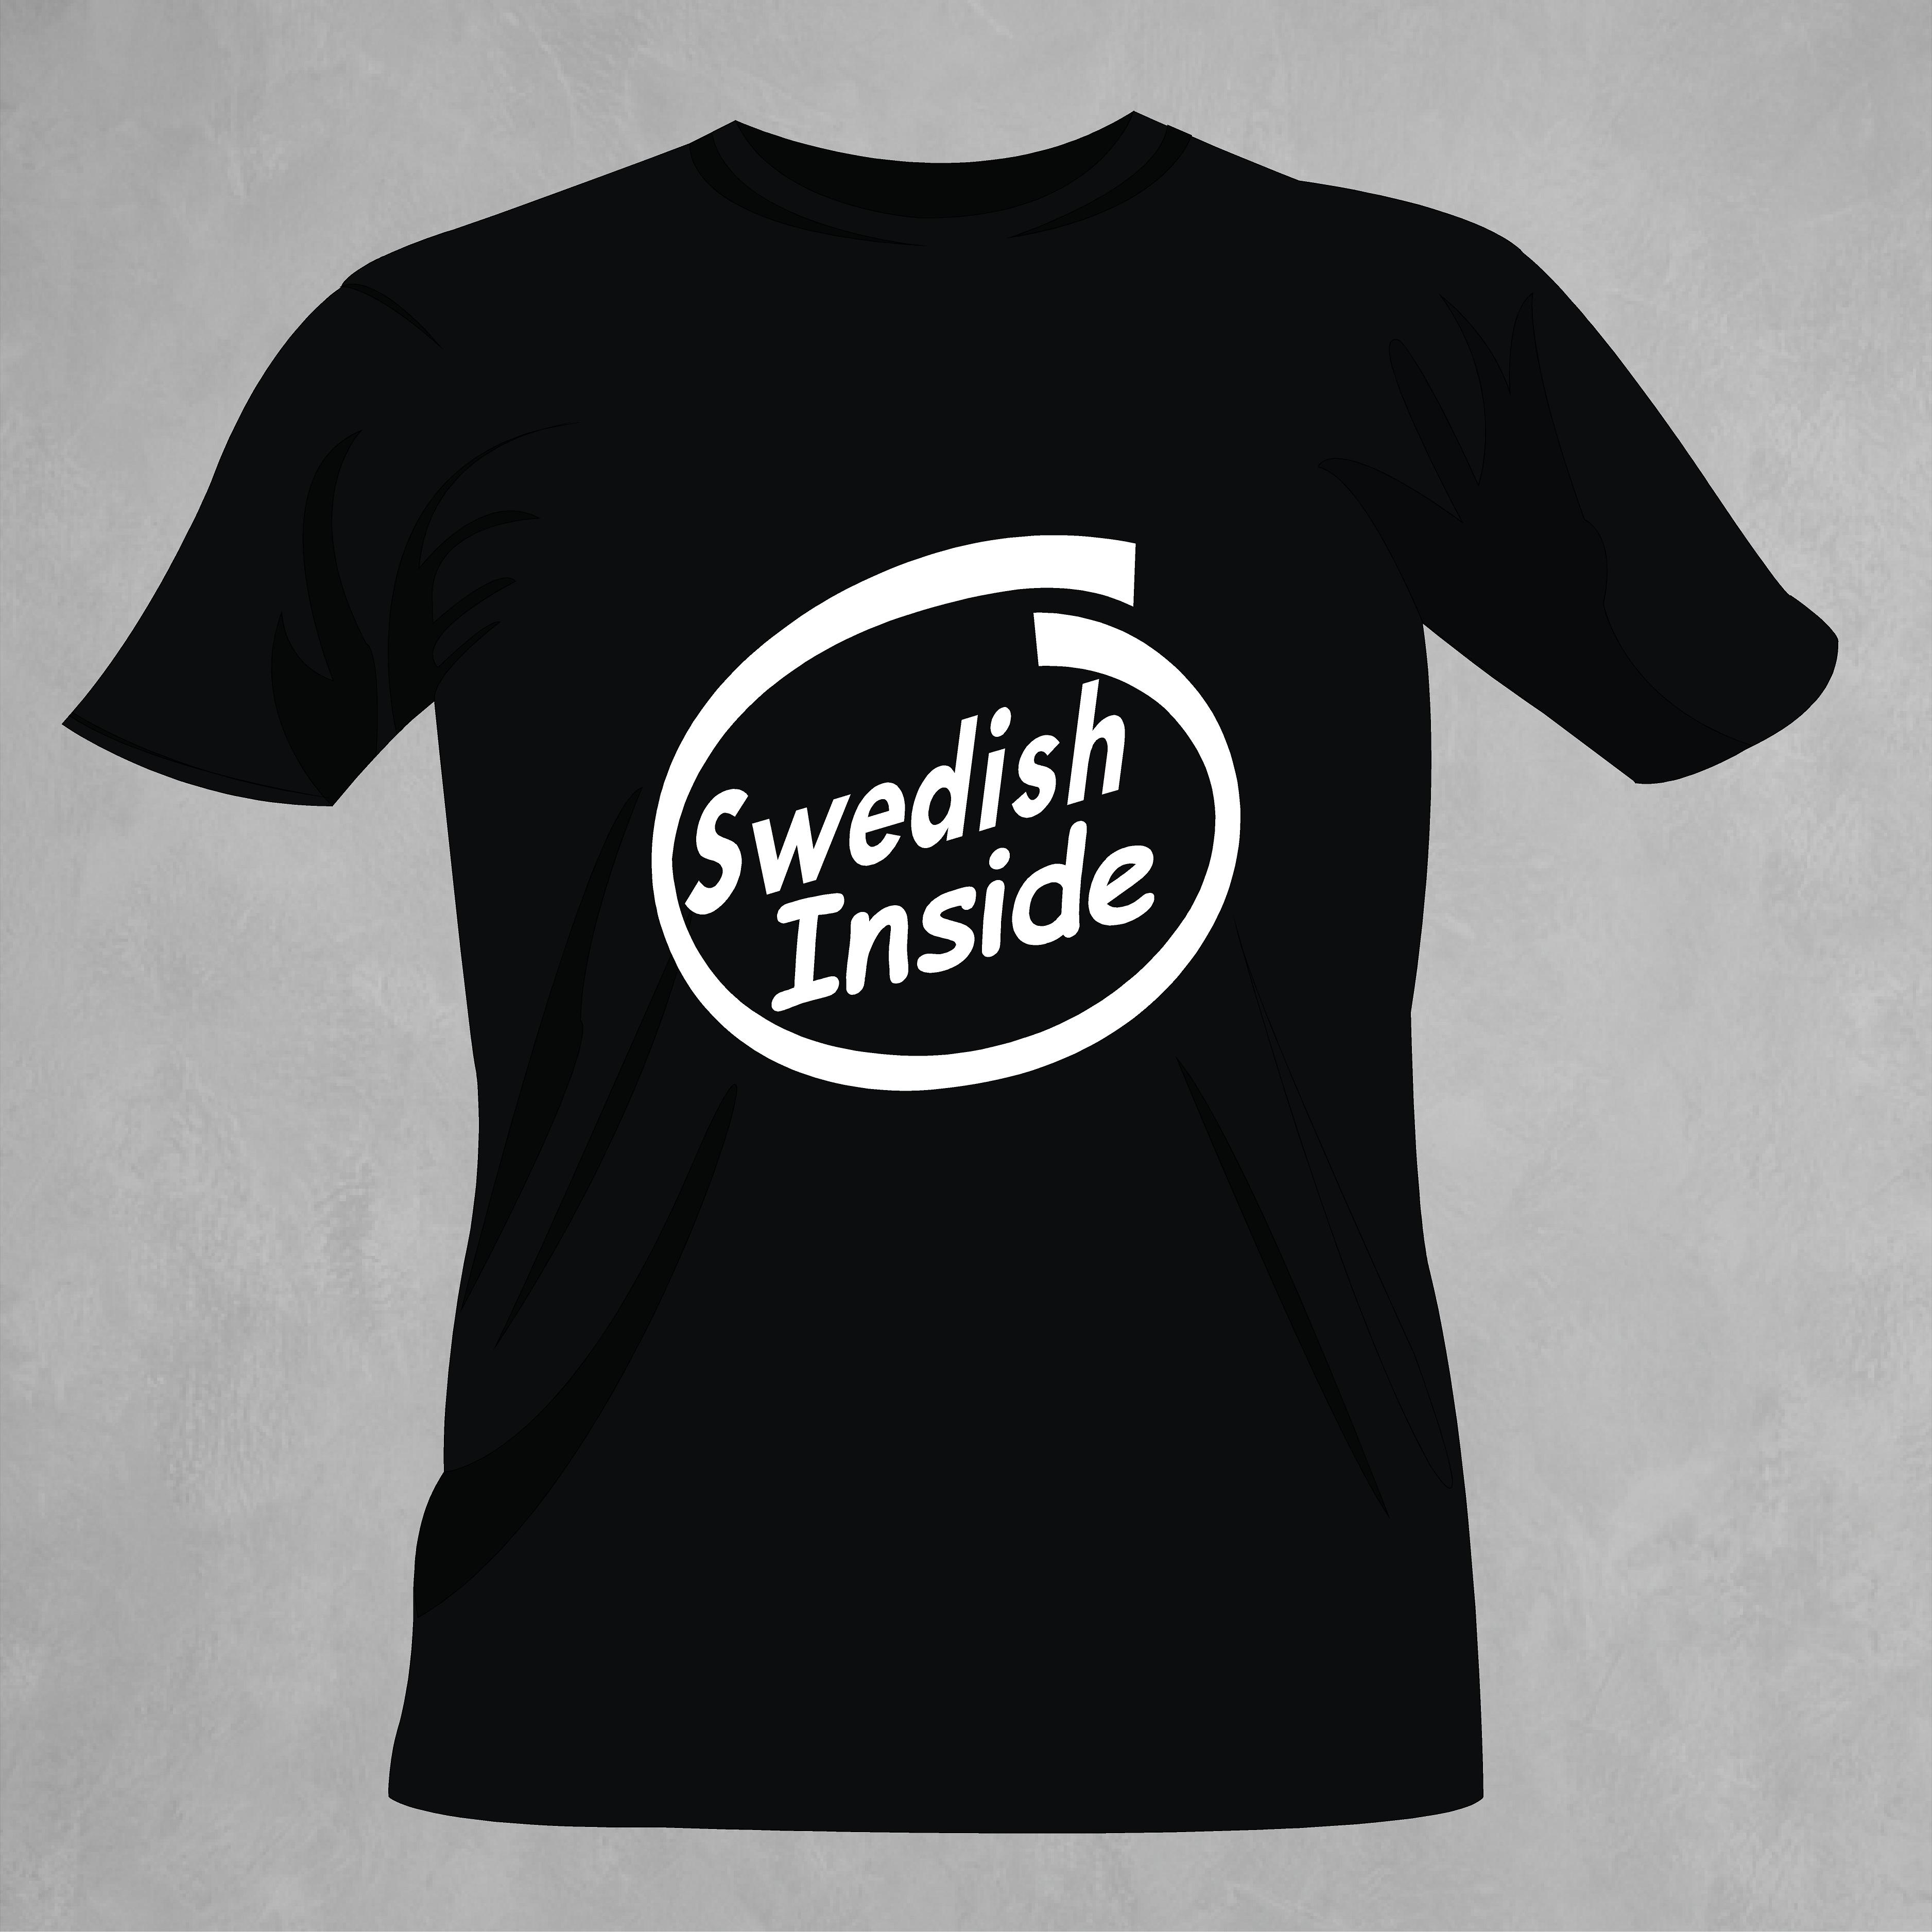 Swedish Inside